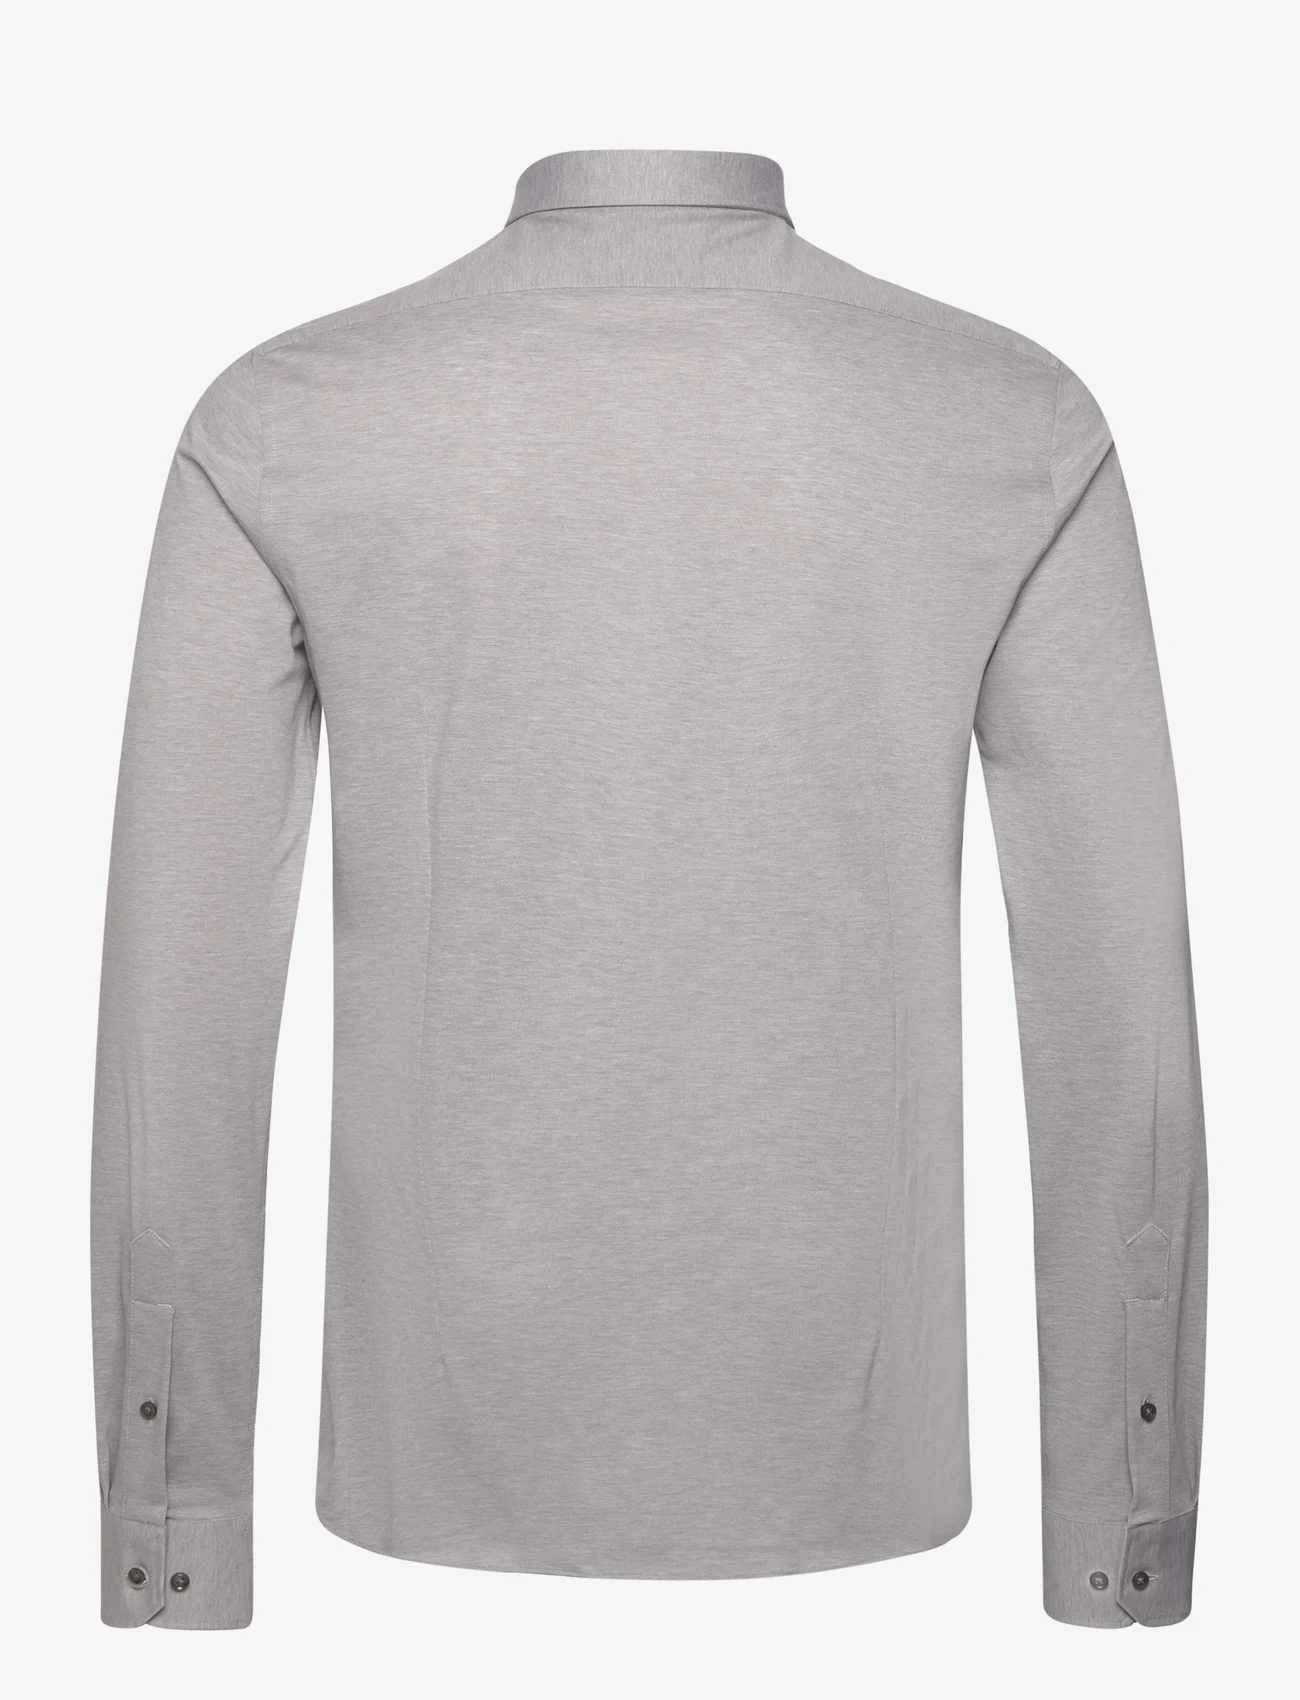 Michael Kors - SOLID PIQUE SLIM SHIRT - basic skjorter - light grey - 1